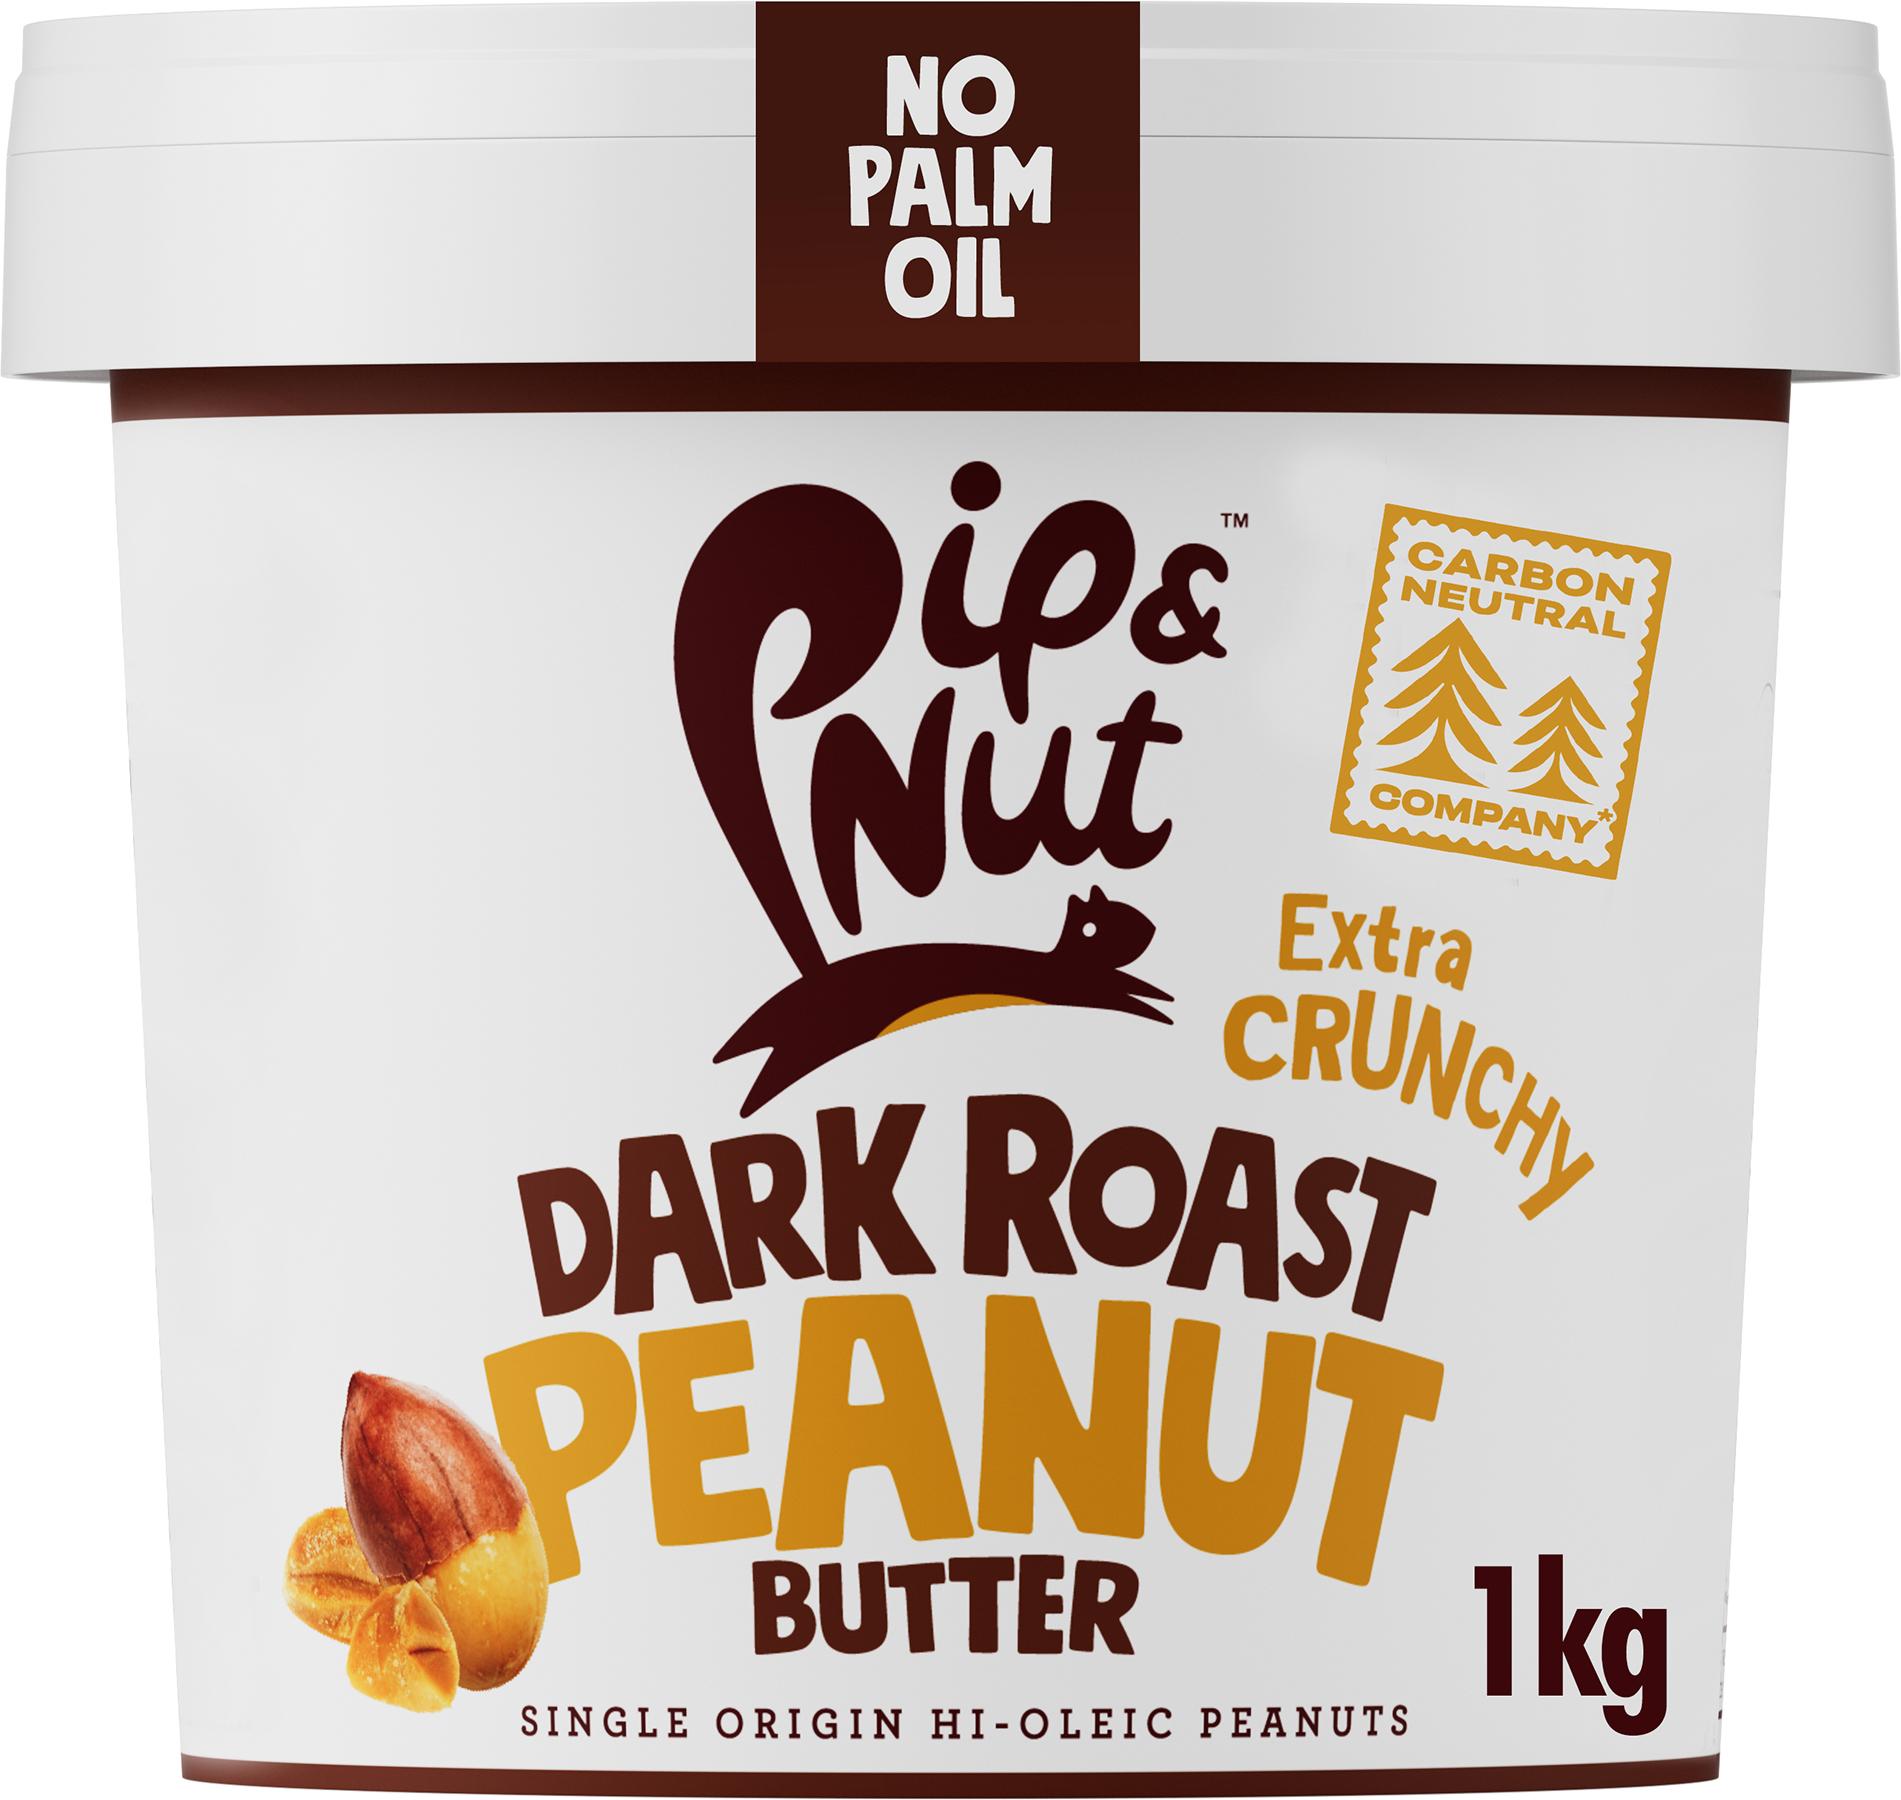 PipandNut Ultimate Crunchy Dark Roast Peanut Butter (1kg)